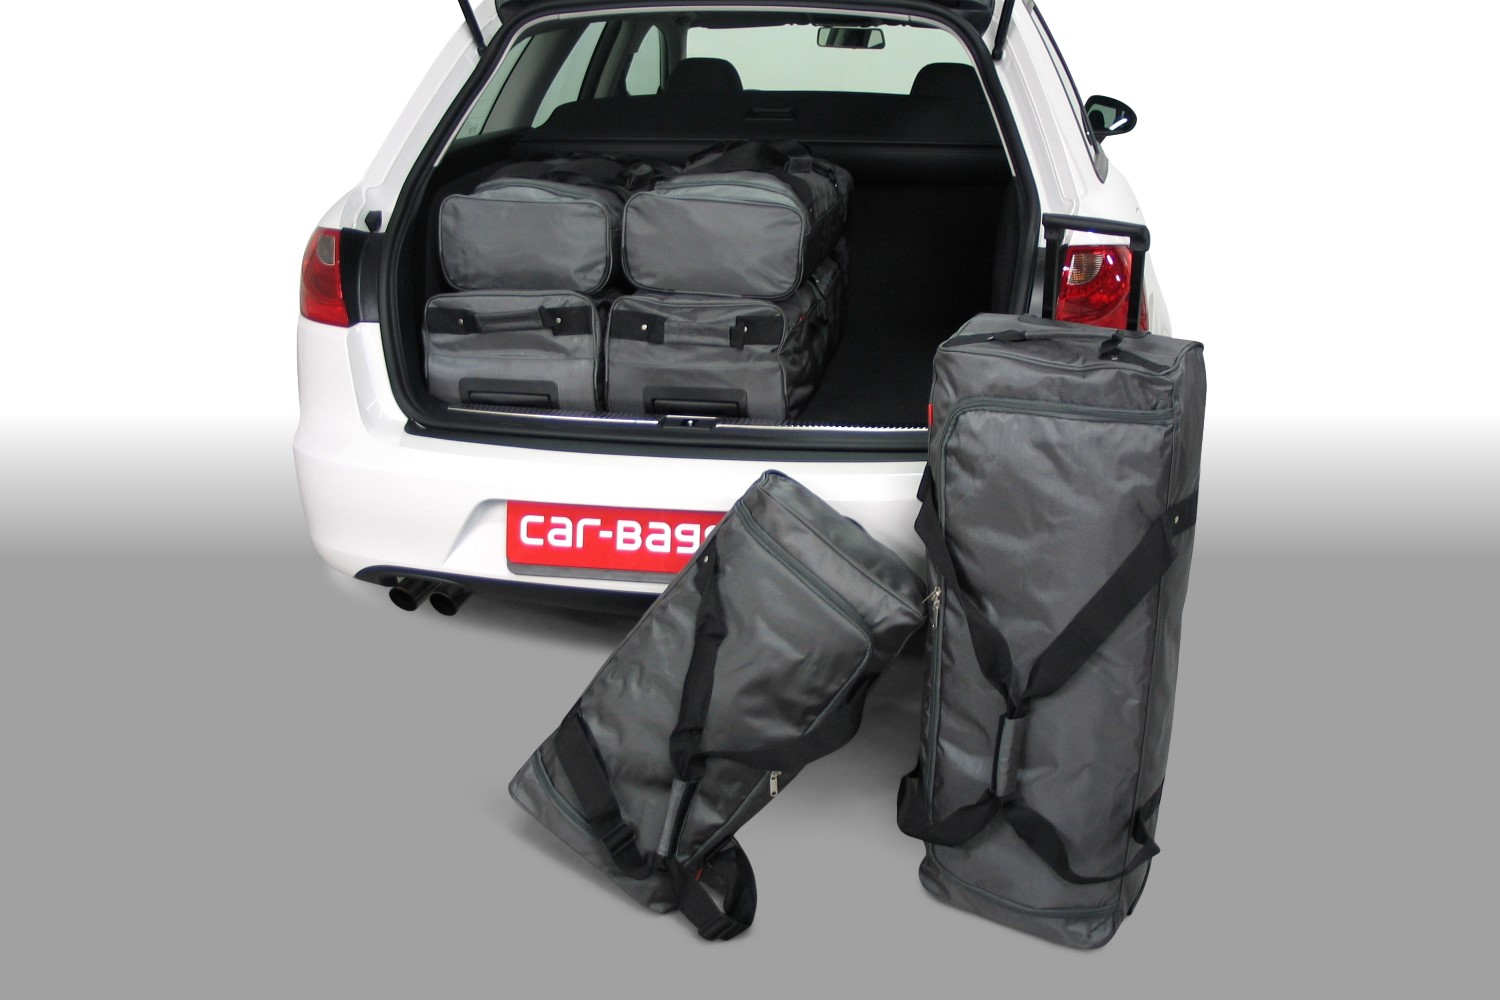 Car Bags Seat Exeo ST 2008-2013